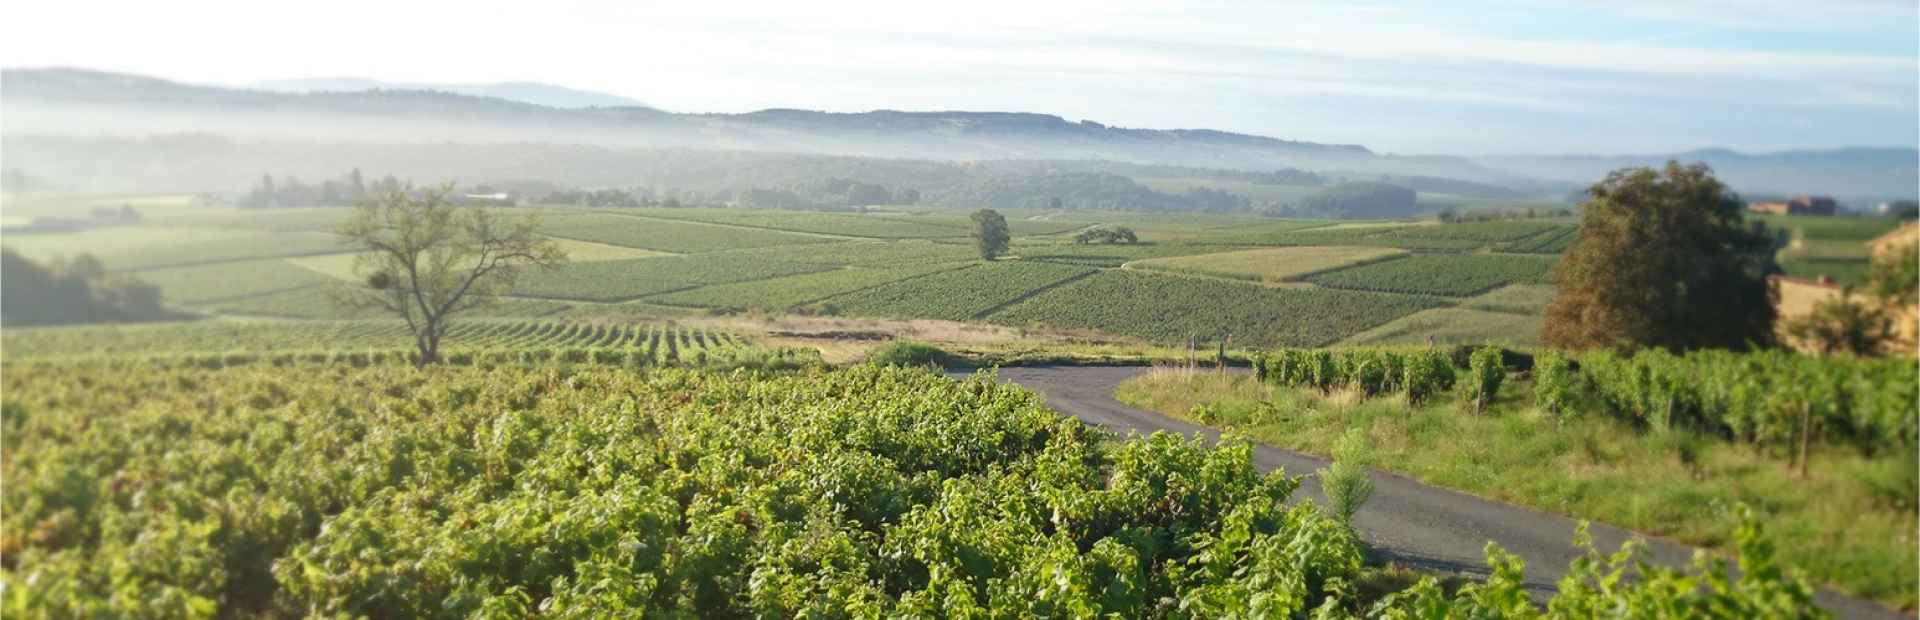 Winesof the appellation Morgon